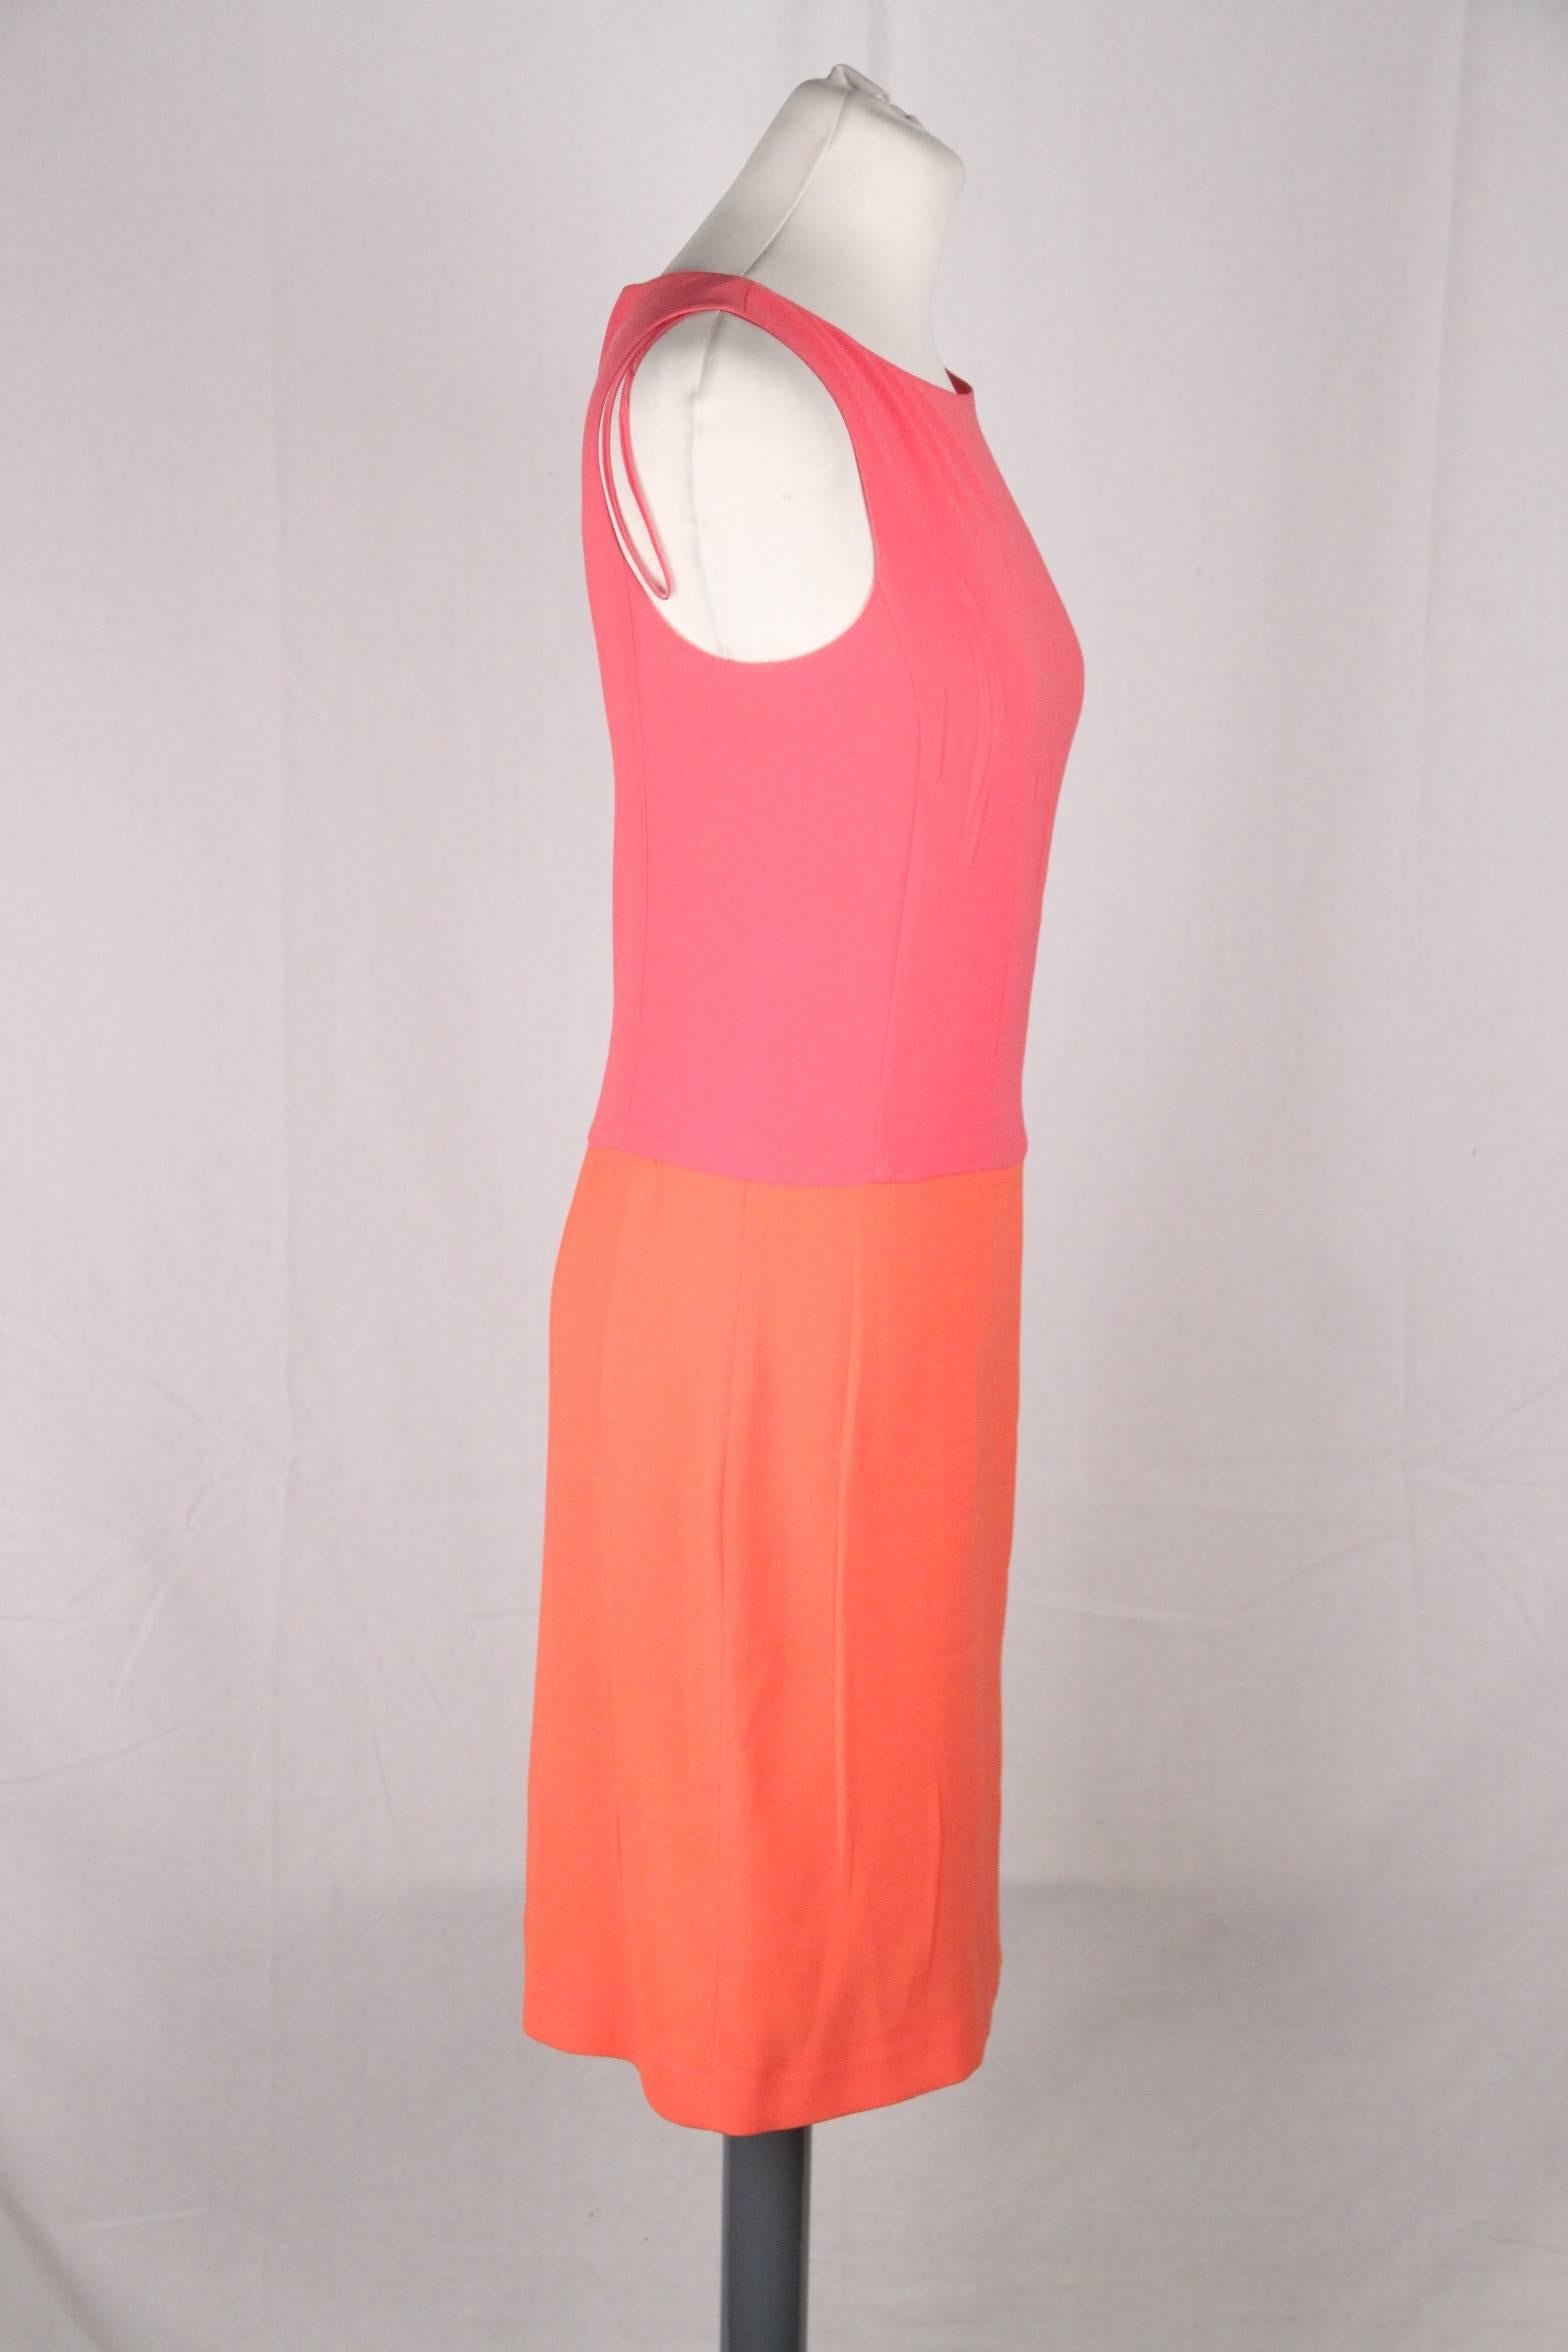 pink and orange colorblock dress